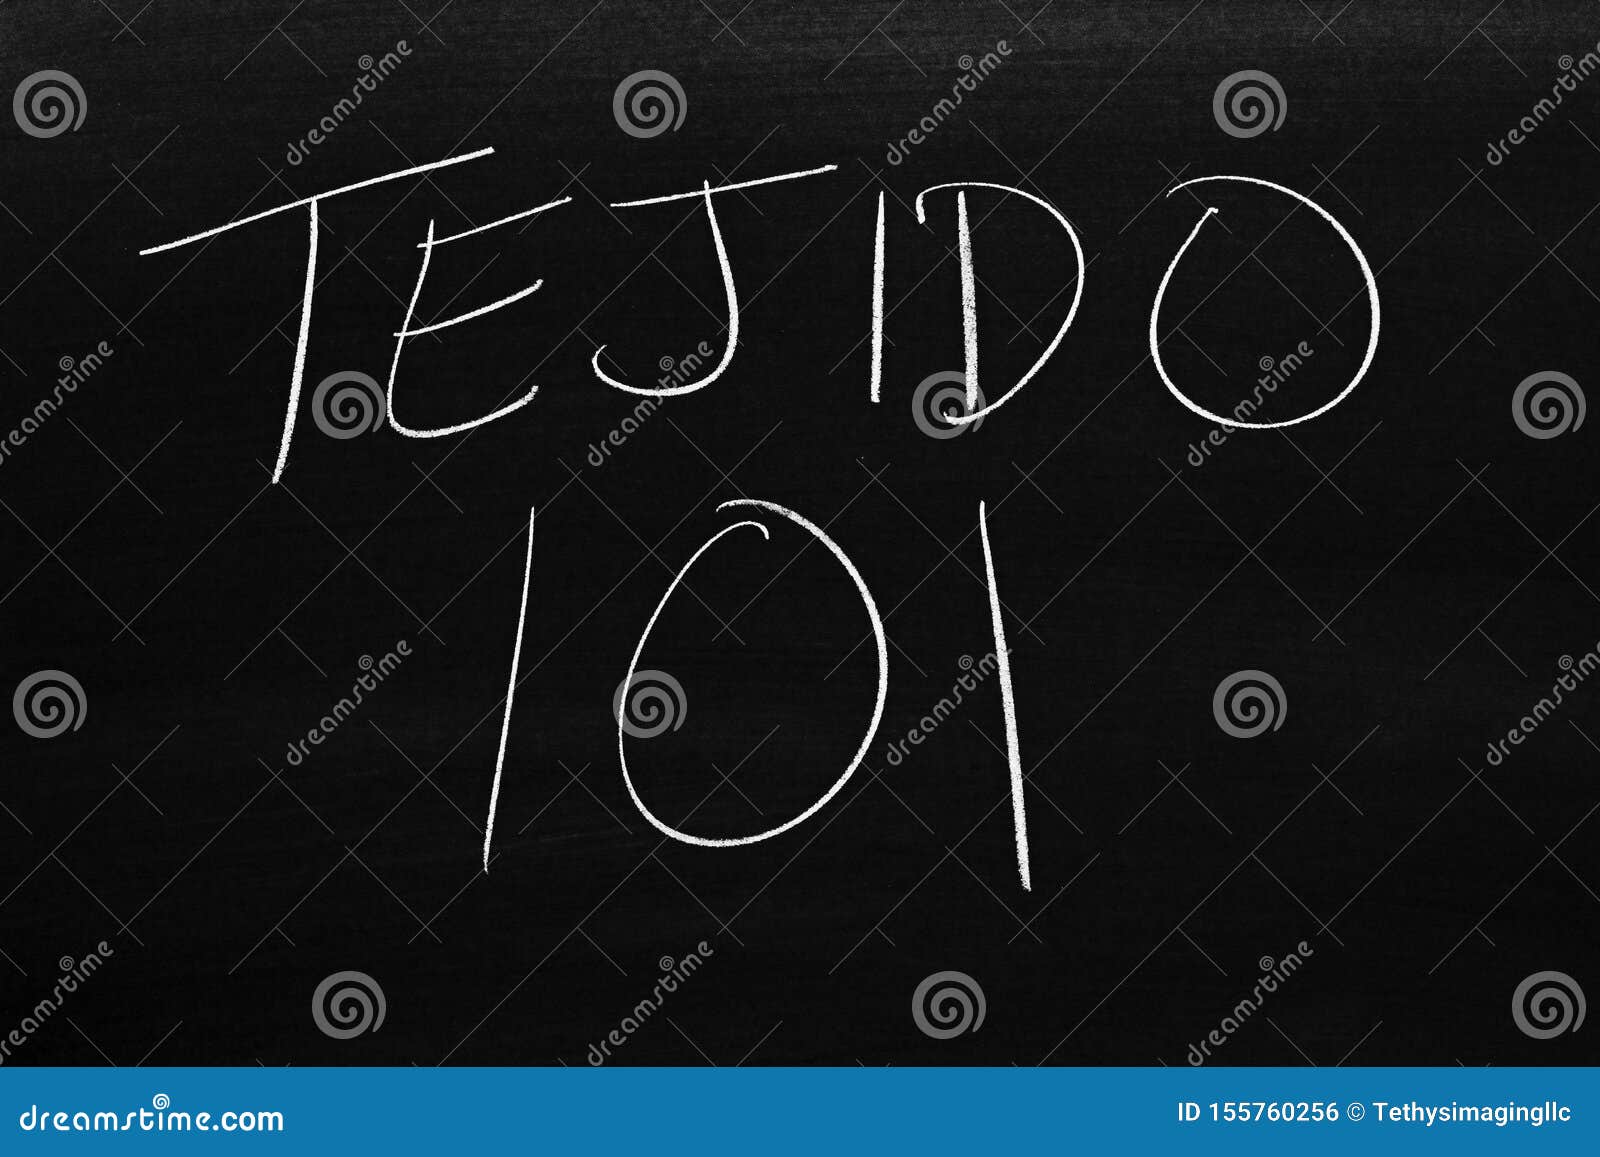 tejido 101 on a blackboard.  translation: knitting 101